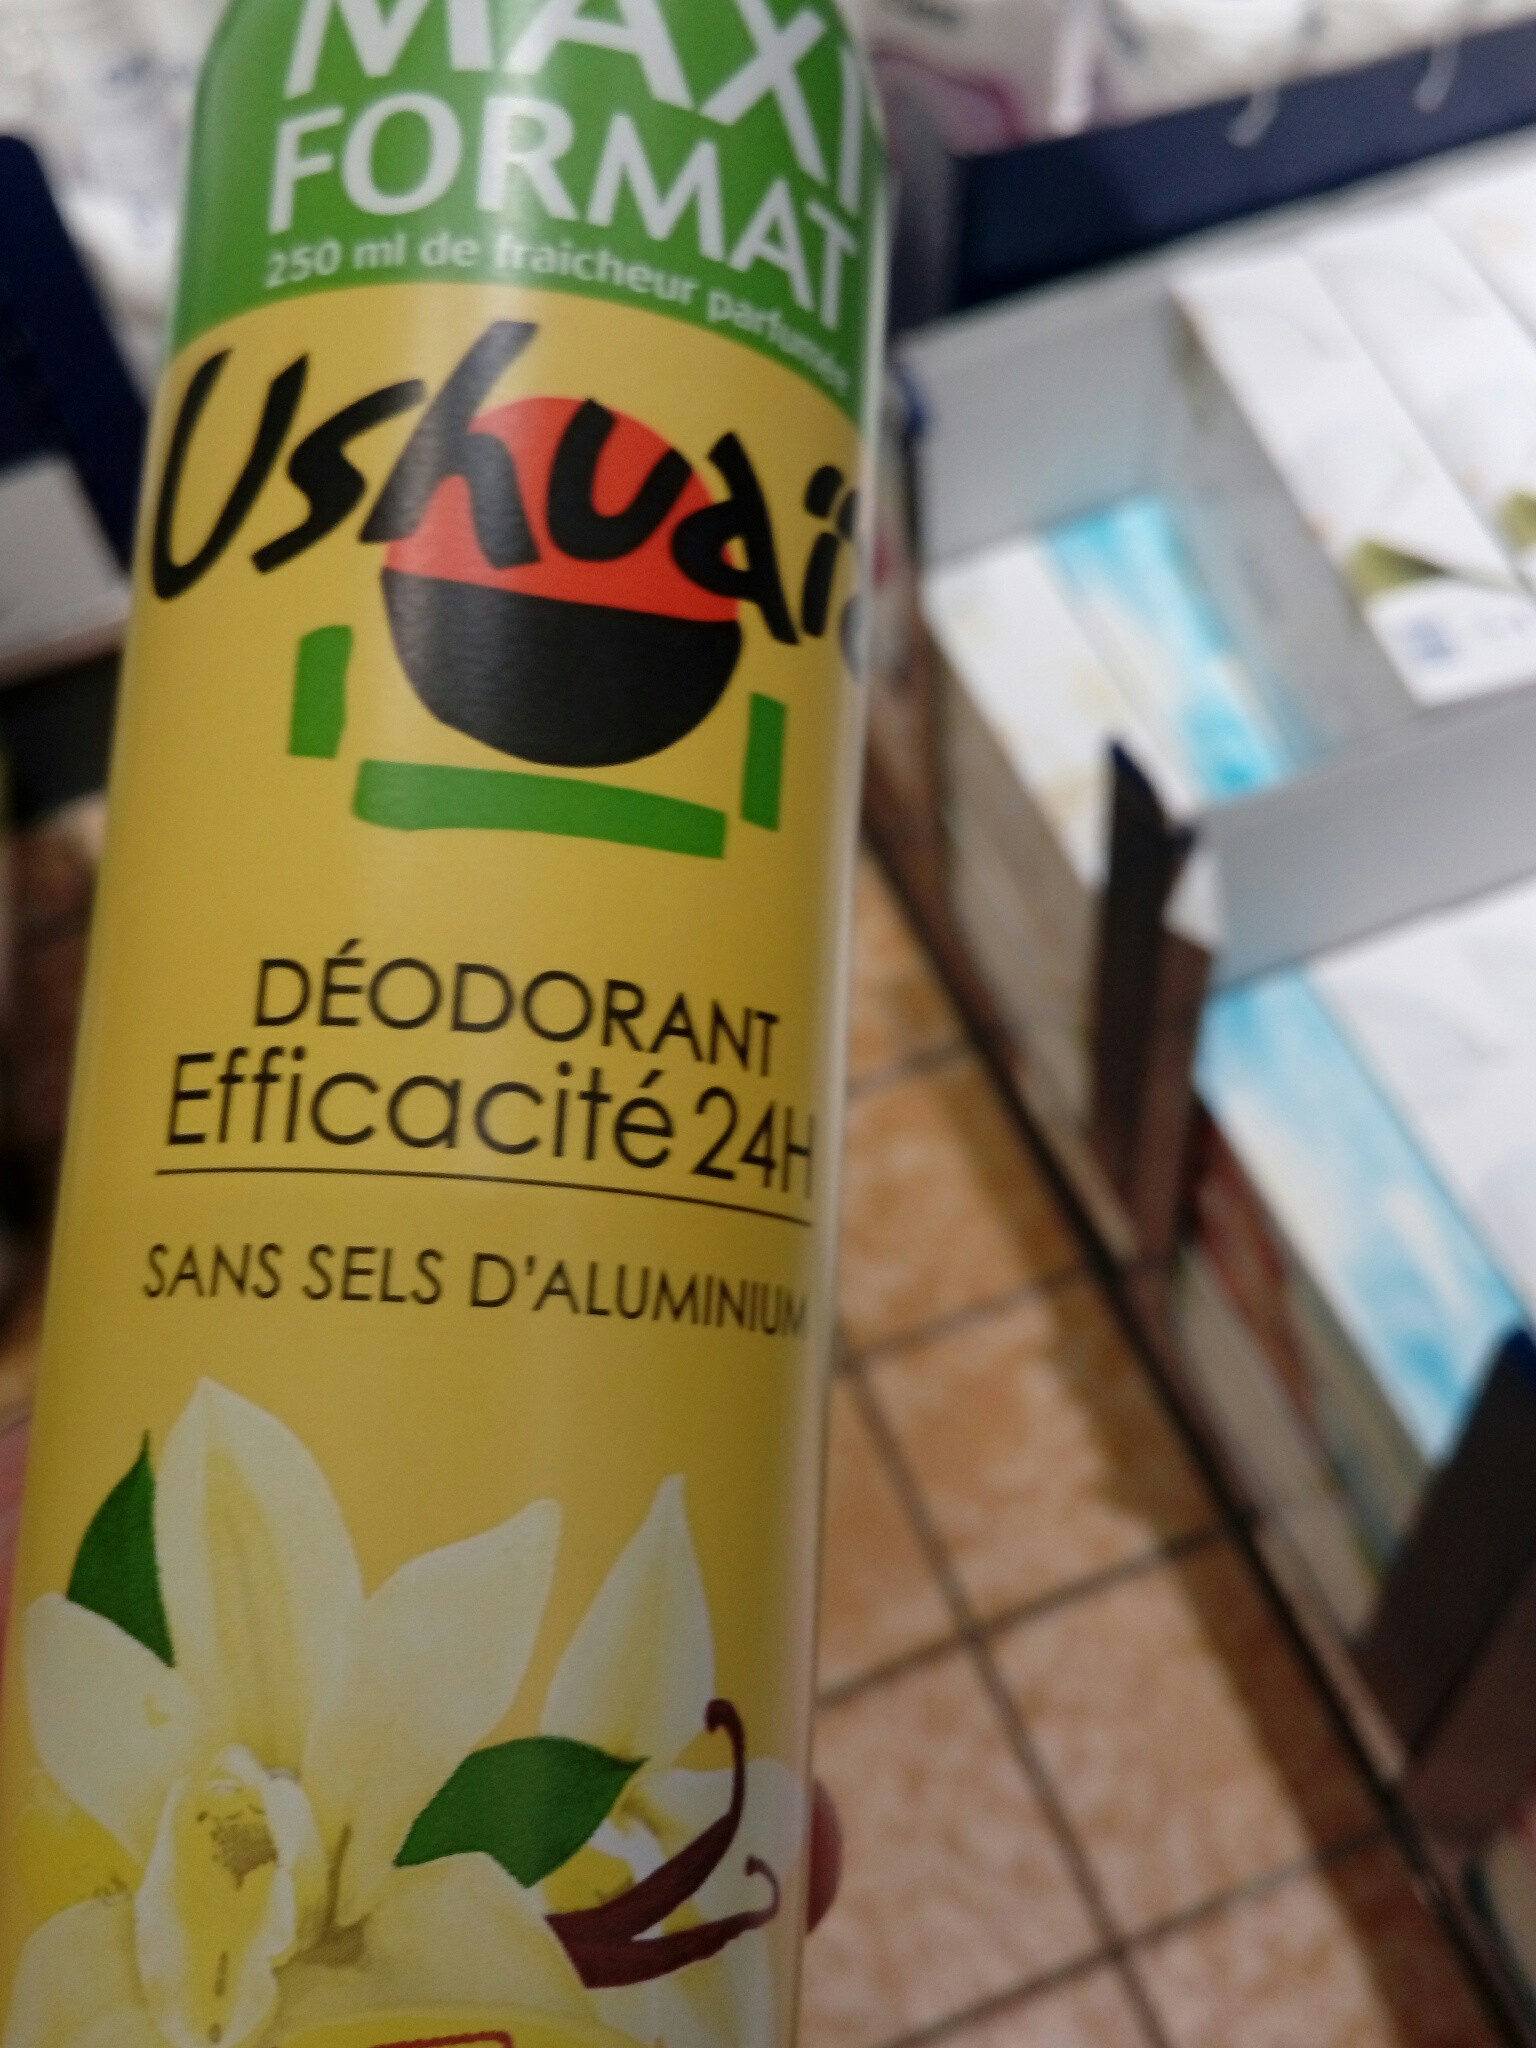 Ushuaia déodorant efficacité 24 h - 製品 - fr